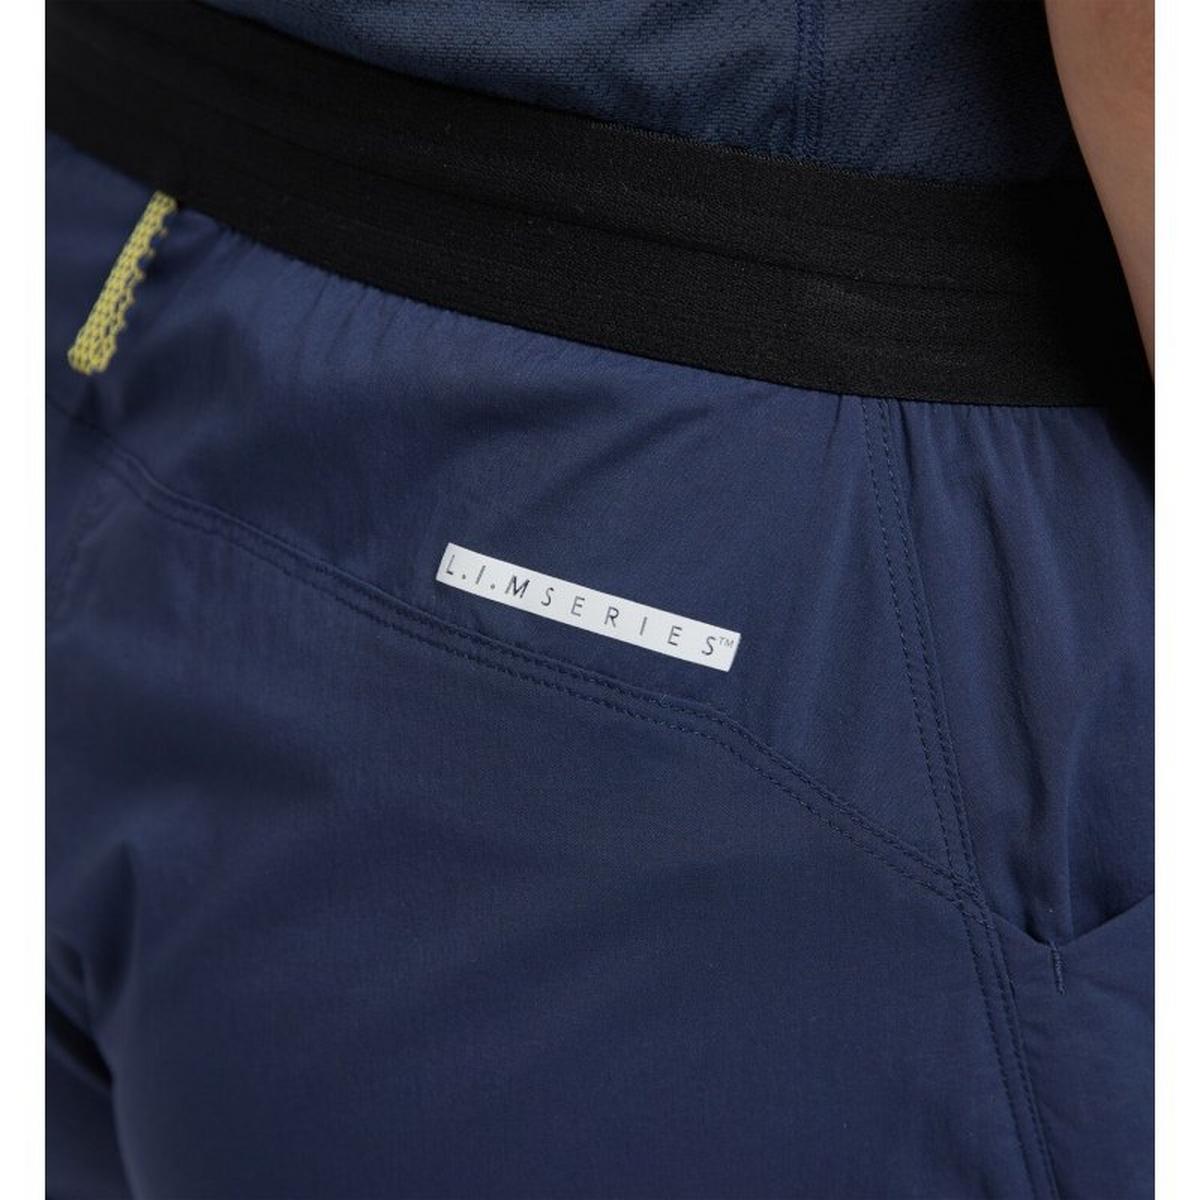 Haglofs Women's Lim Fuse Shorts - Tarn Blue